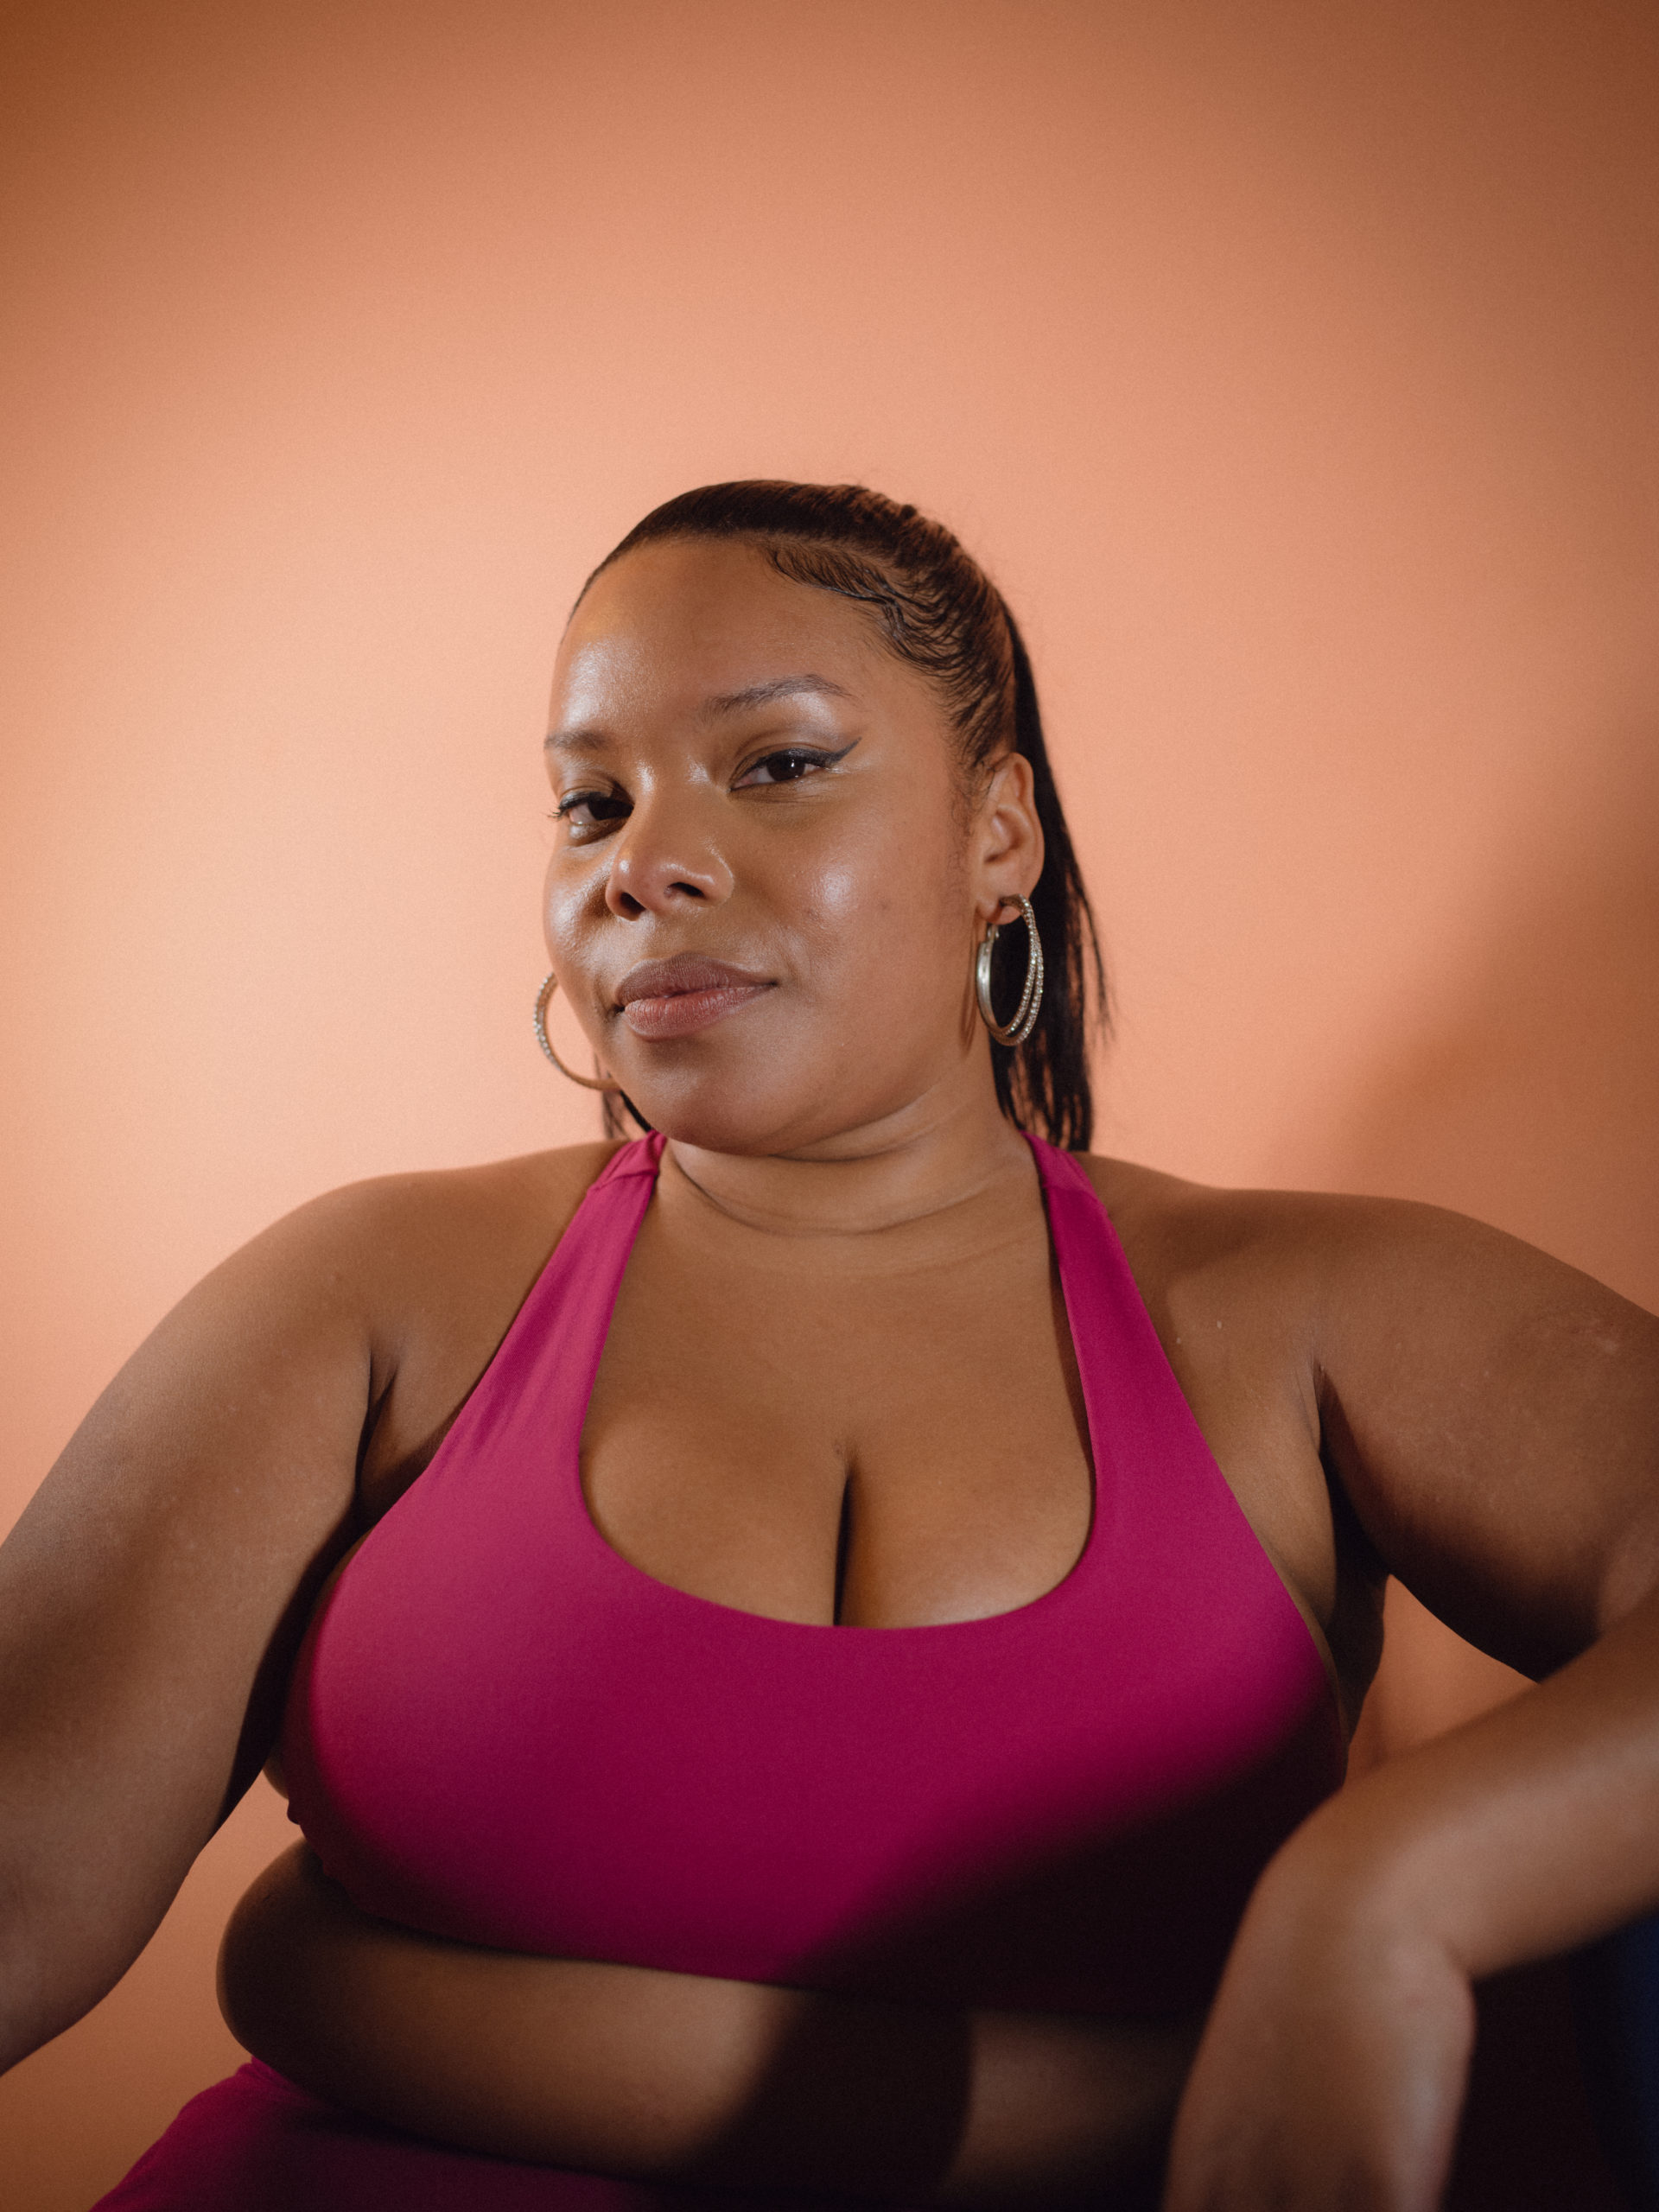 GUAP Meets: Chloe Pierre, Founder of Wellness Brand thy.self [@thy.self]